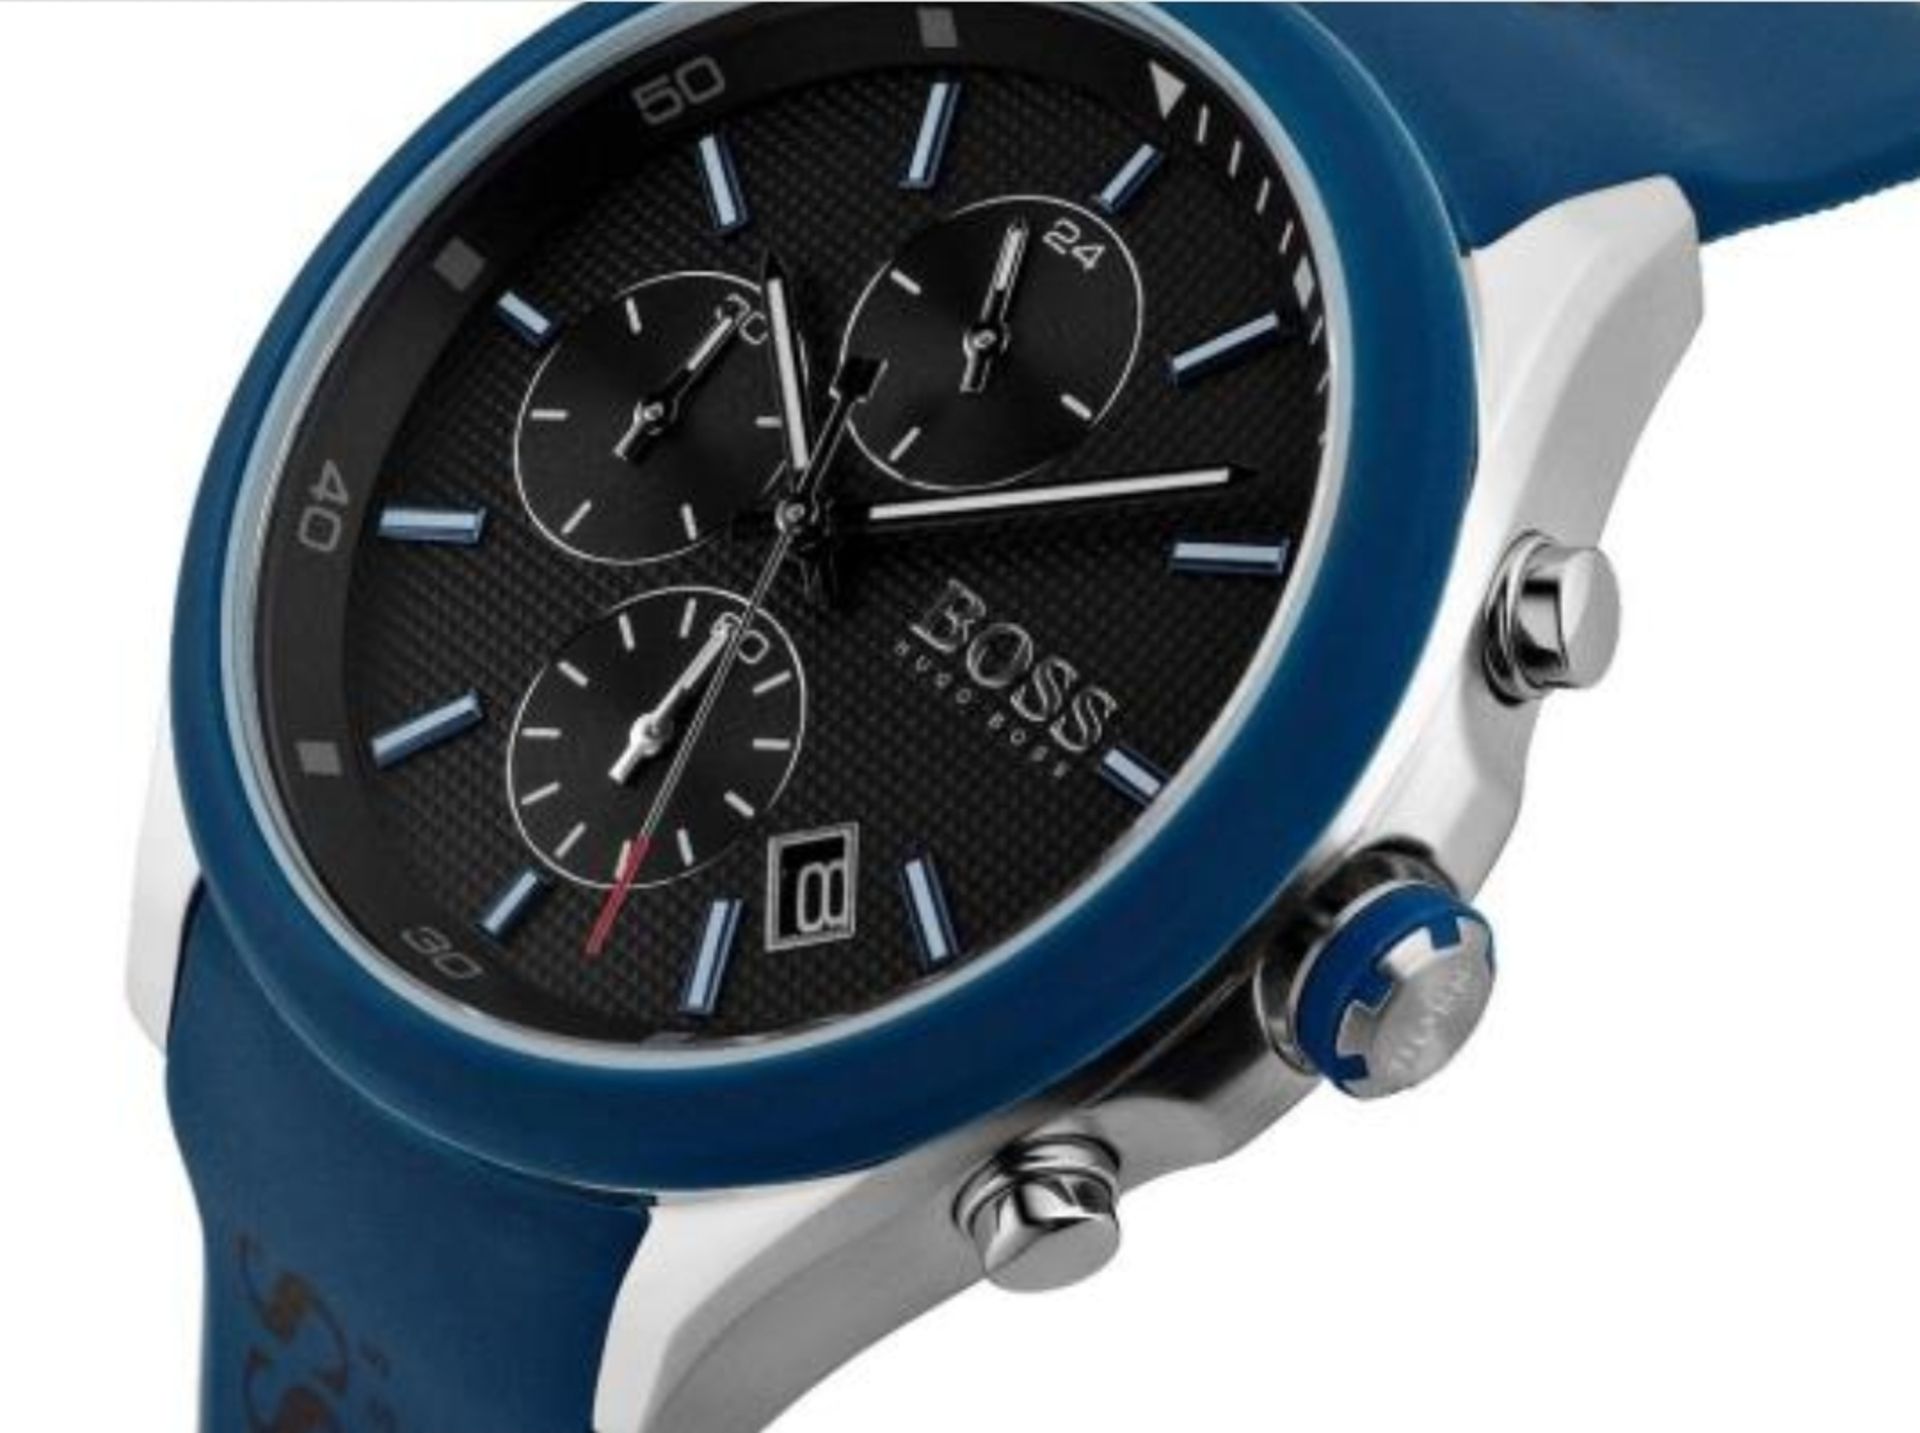 Hugo Boss 1513717 Men's Velocity Blue Rubber Strap Quartz Chronograph Watch - Image 10 of 11